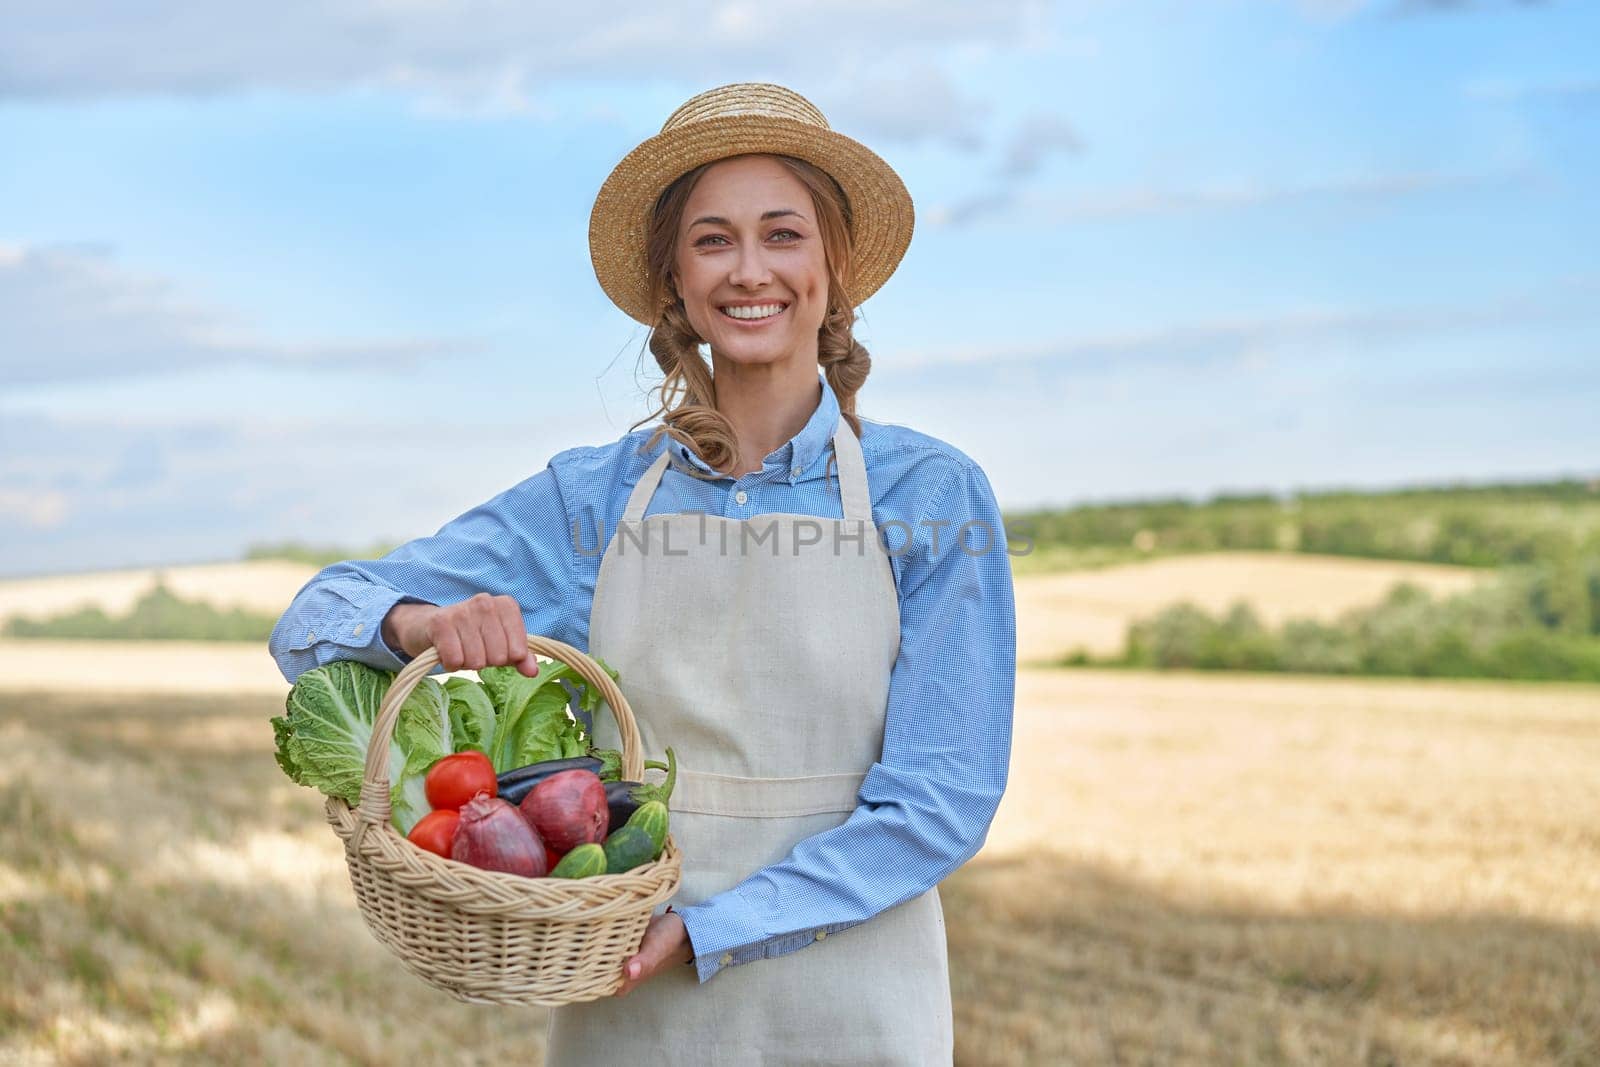 Woman farmer straw hat holding basket vegetable onion tomato salad cucumber standing farmland smiling Female agronomist specialist